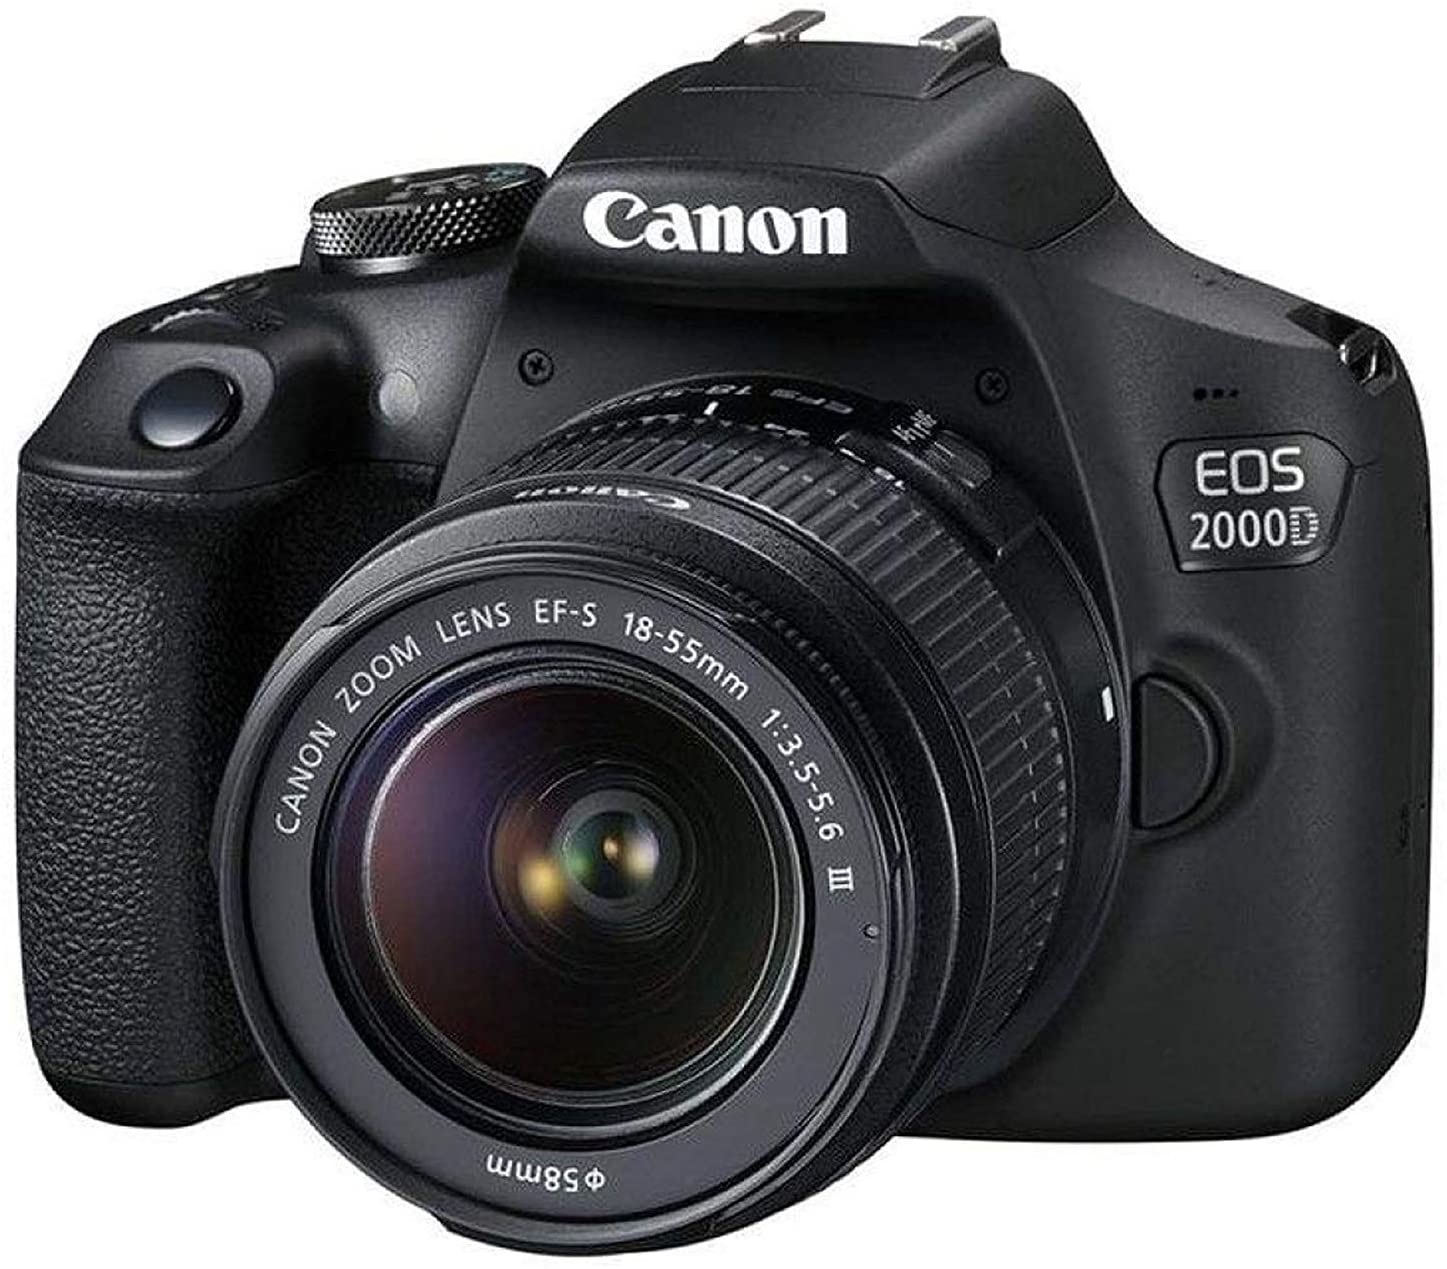 Canon EOS 2000D  Digital SLR Camera with 18-55mm Lens Kit (Black) - Basic Accessories Bundle - image 2 of 3